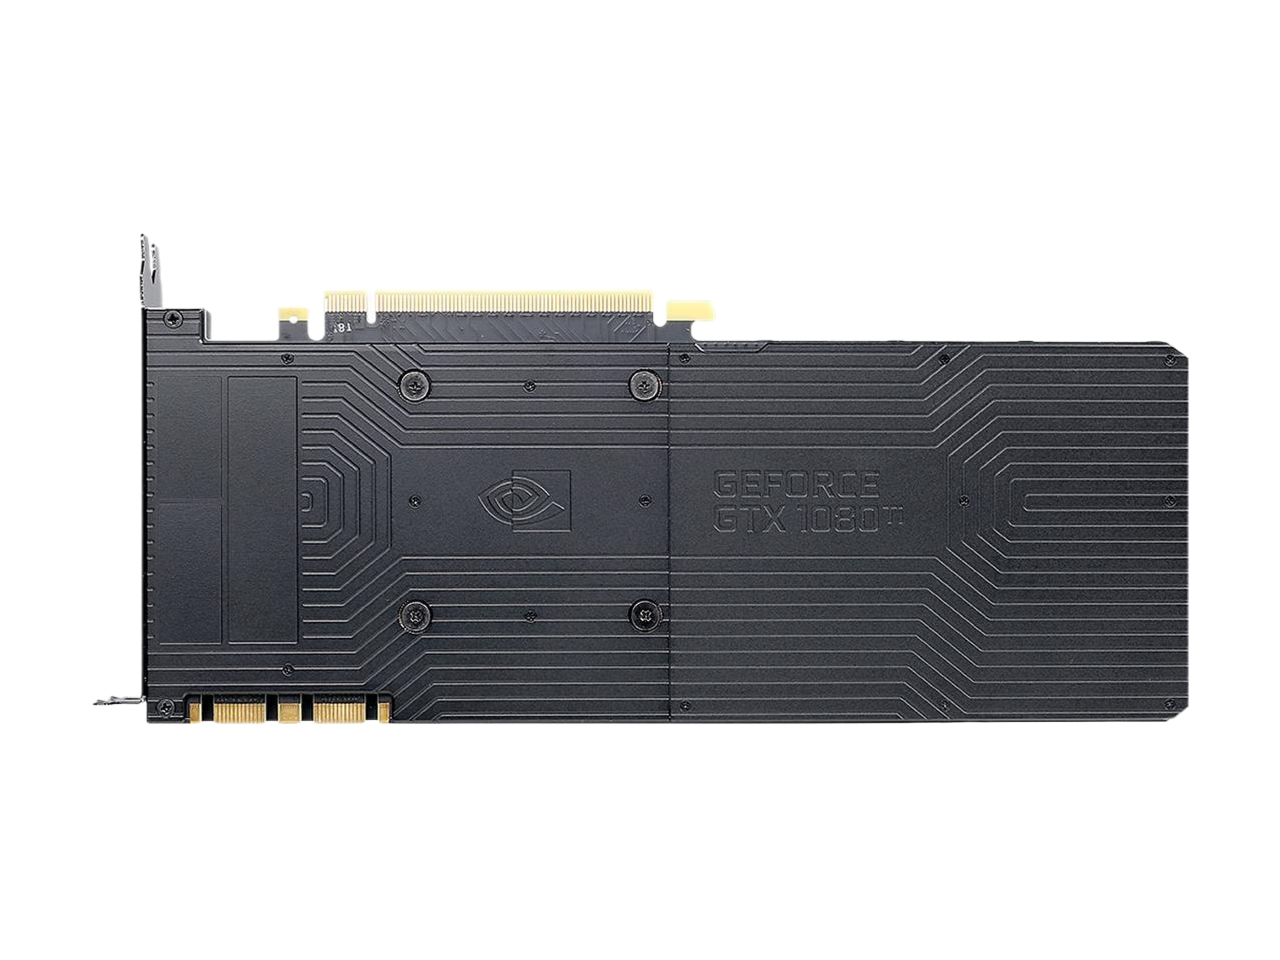 EVGA GeForce GTX 1080 Ti FE 11GB GDDR5X PCI Express 3.0 SLI Support Founders Edition Video Card 11G-P4-6390-KR